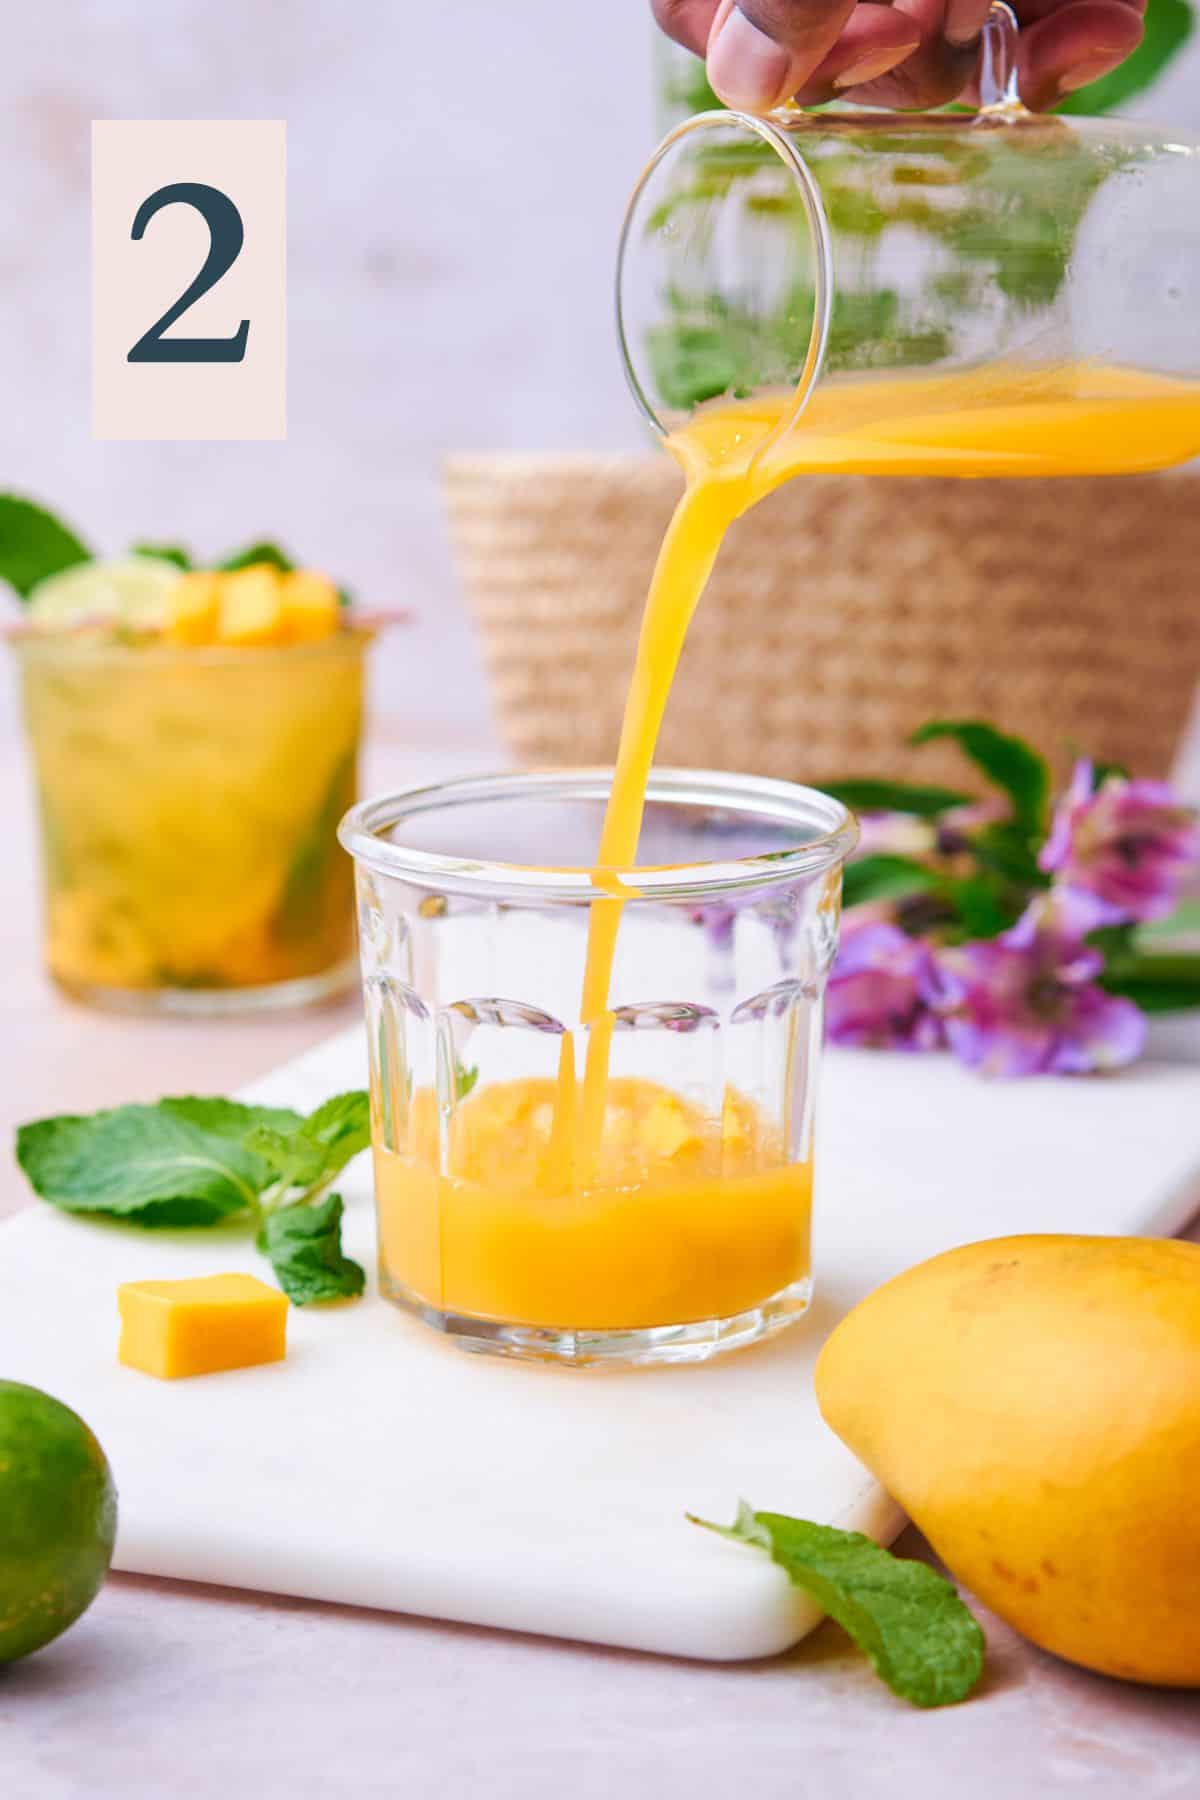 Adding mango nectar inside of the short glass.